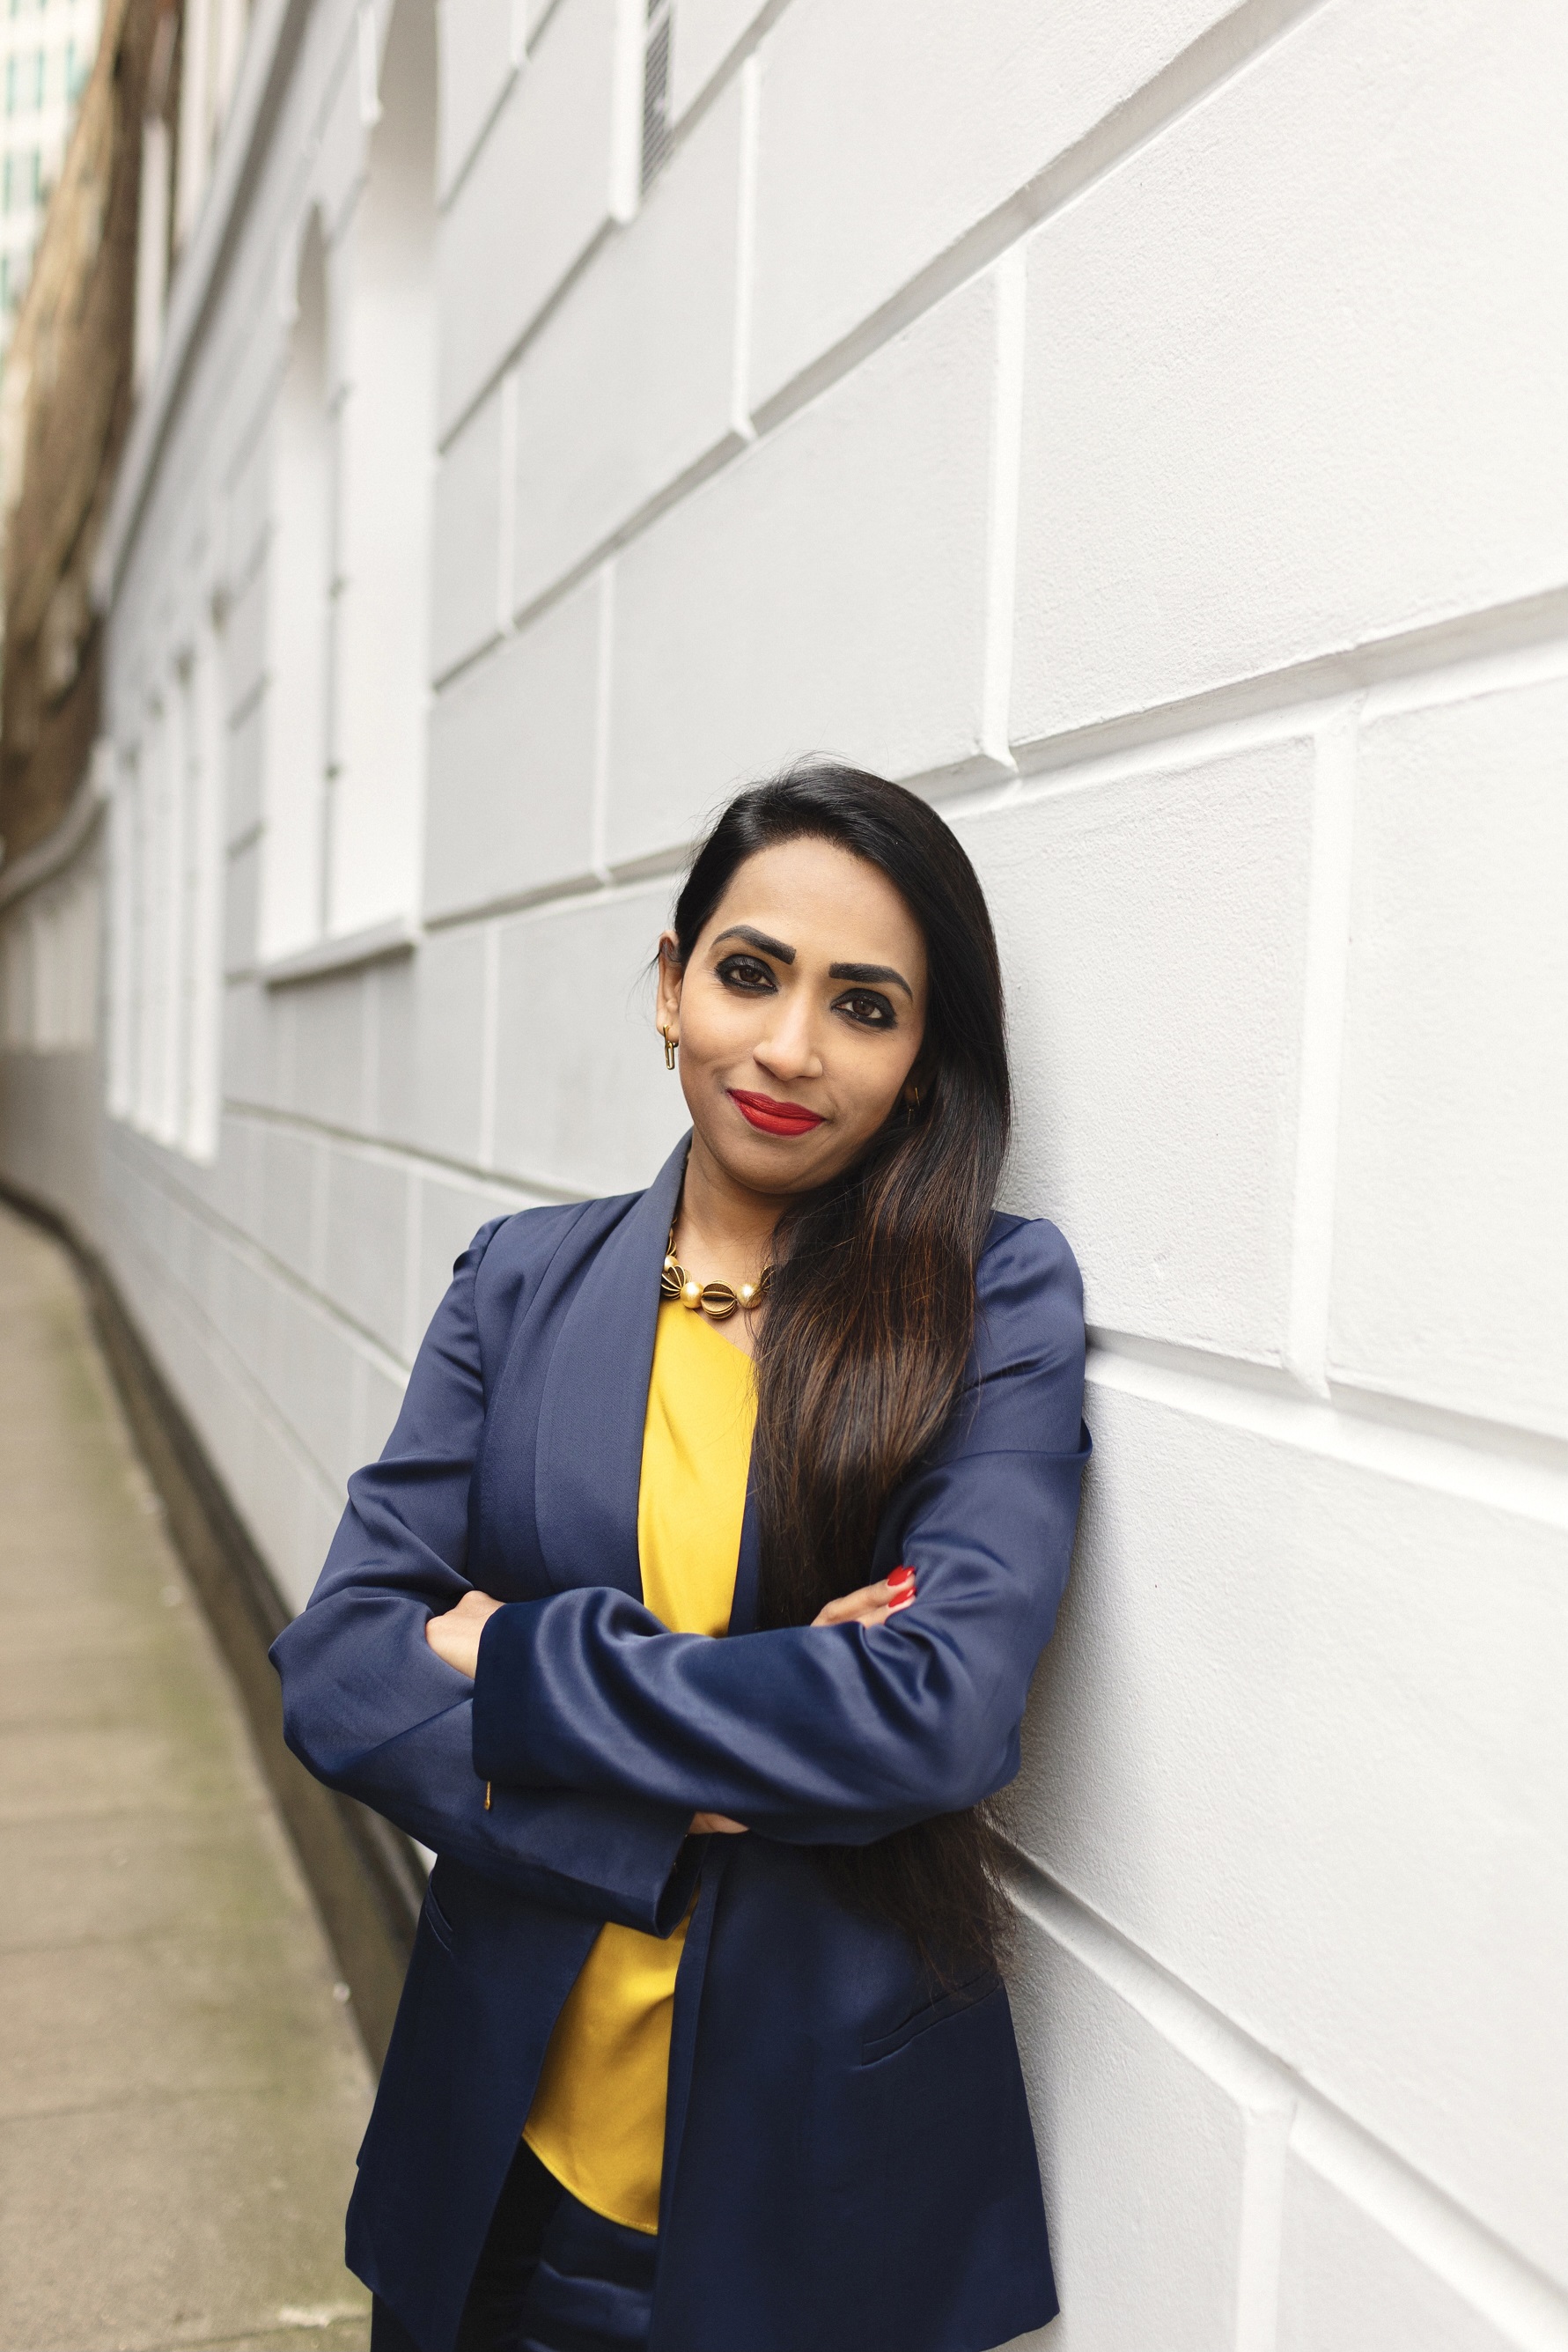 Aradhana Khowala is CEO and founder of Aptamind Partners